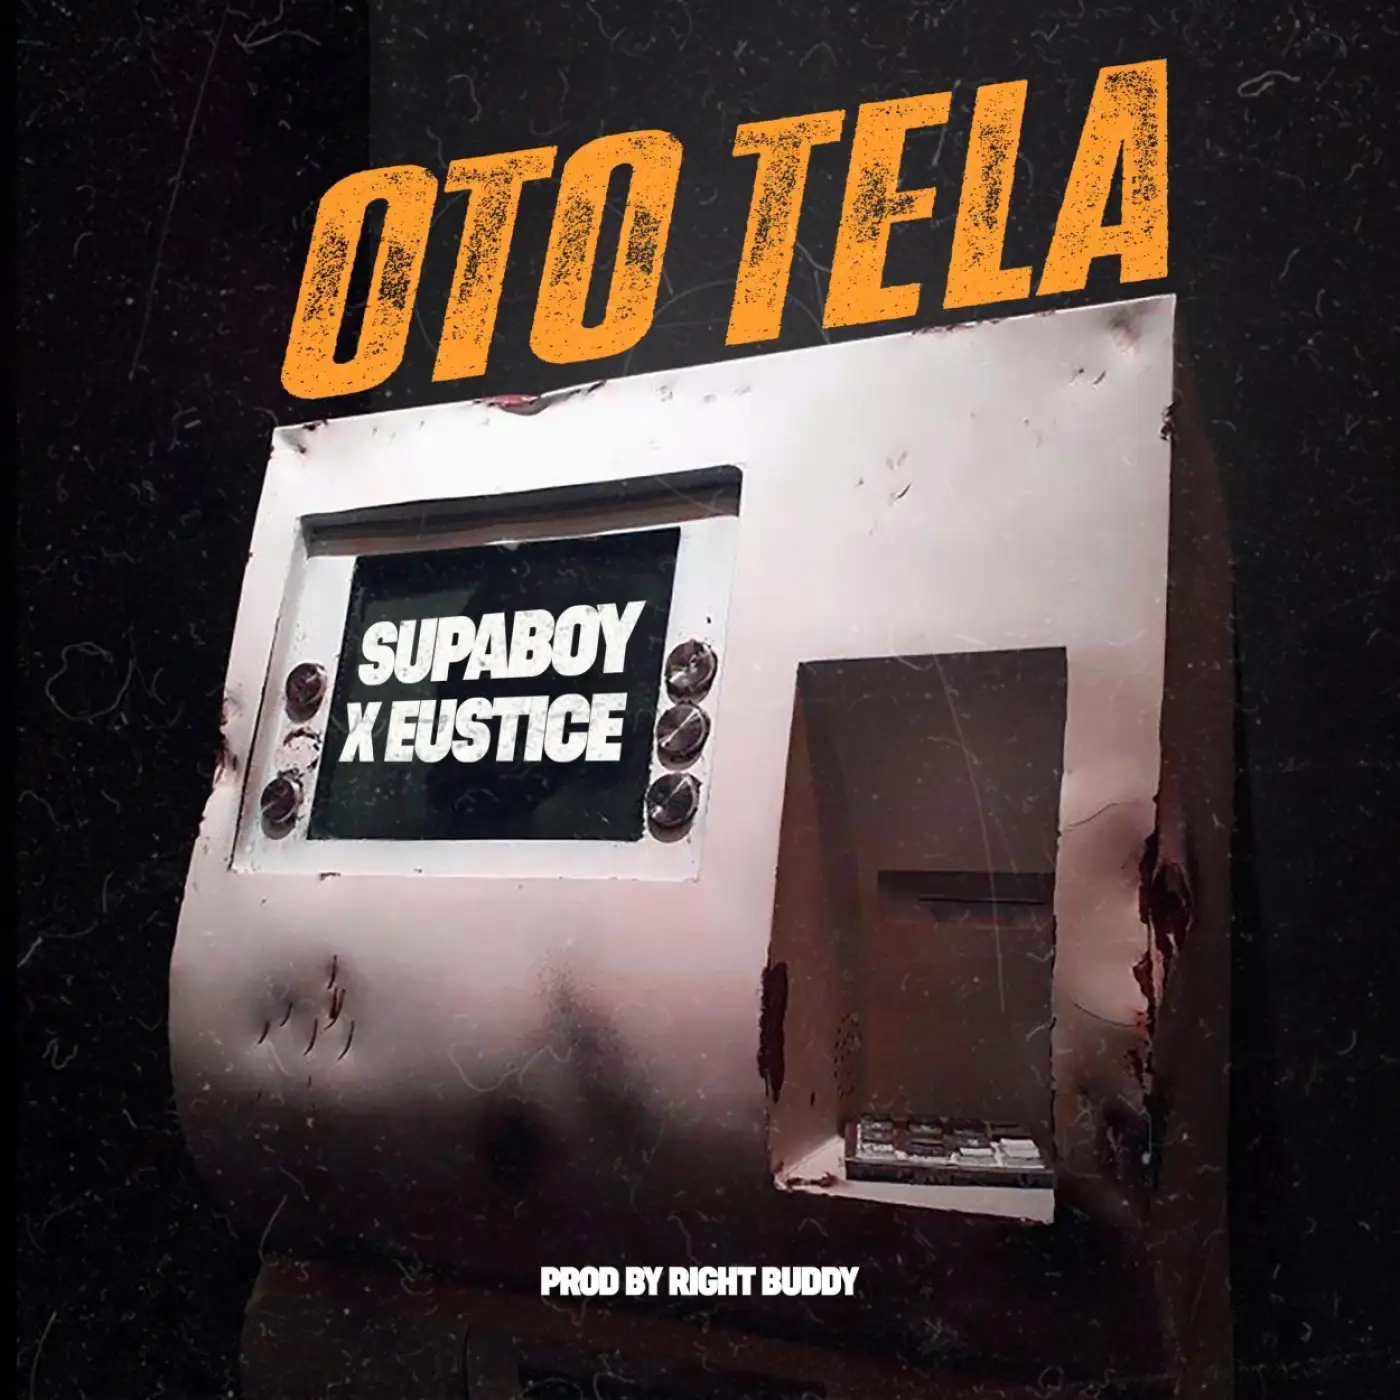 Supaboy-Supaboy - Ototela ft Eustice-song artwork cover